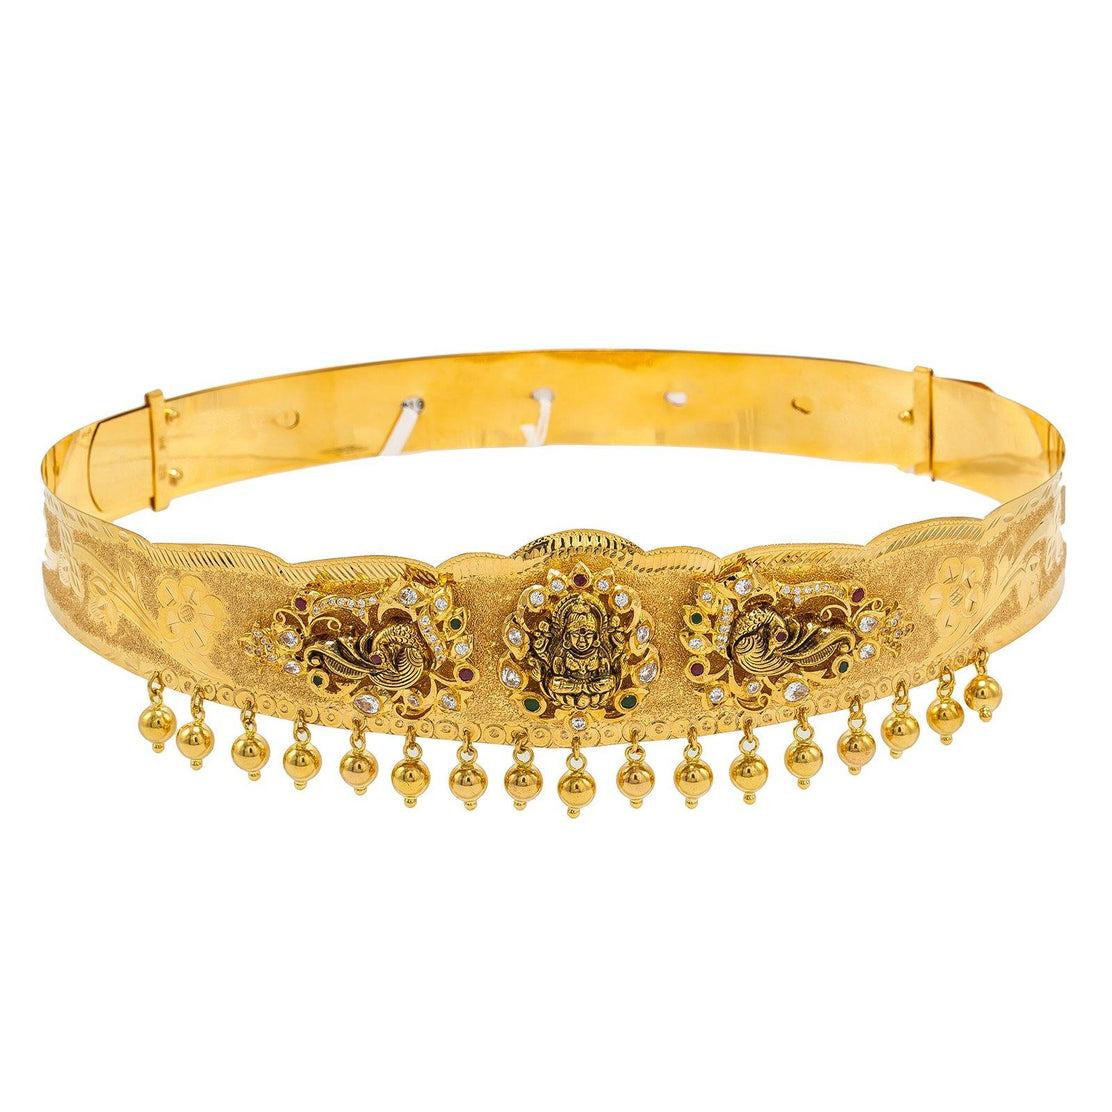 22K Gold Lakshmi Waist Belt - Size 32 with Antique Finish – Virani Jewelers